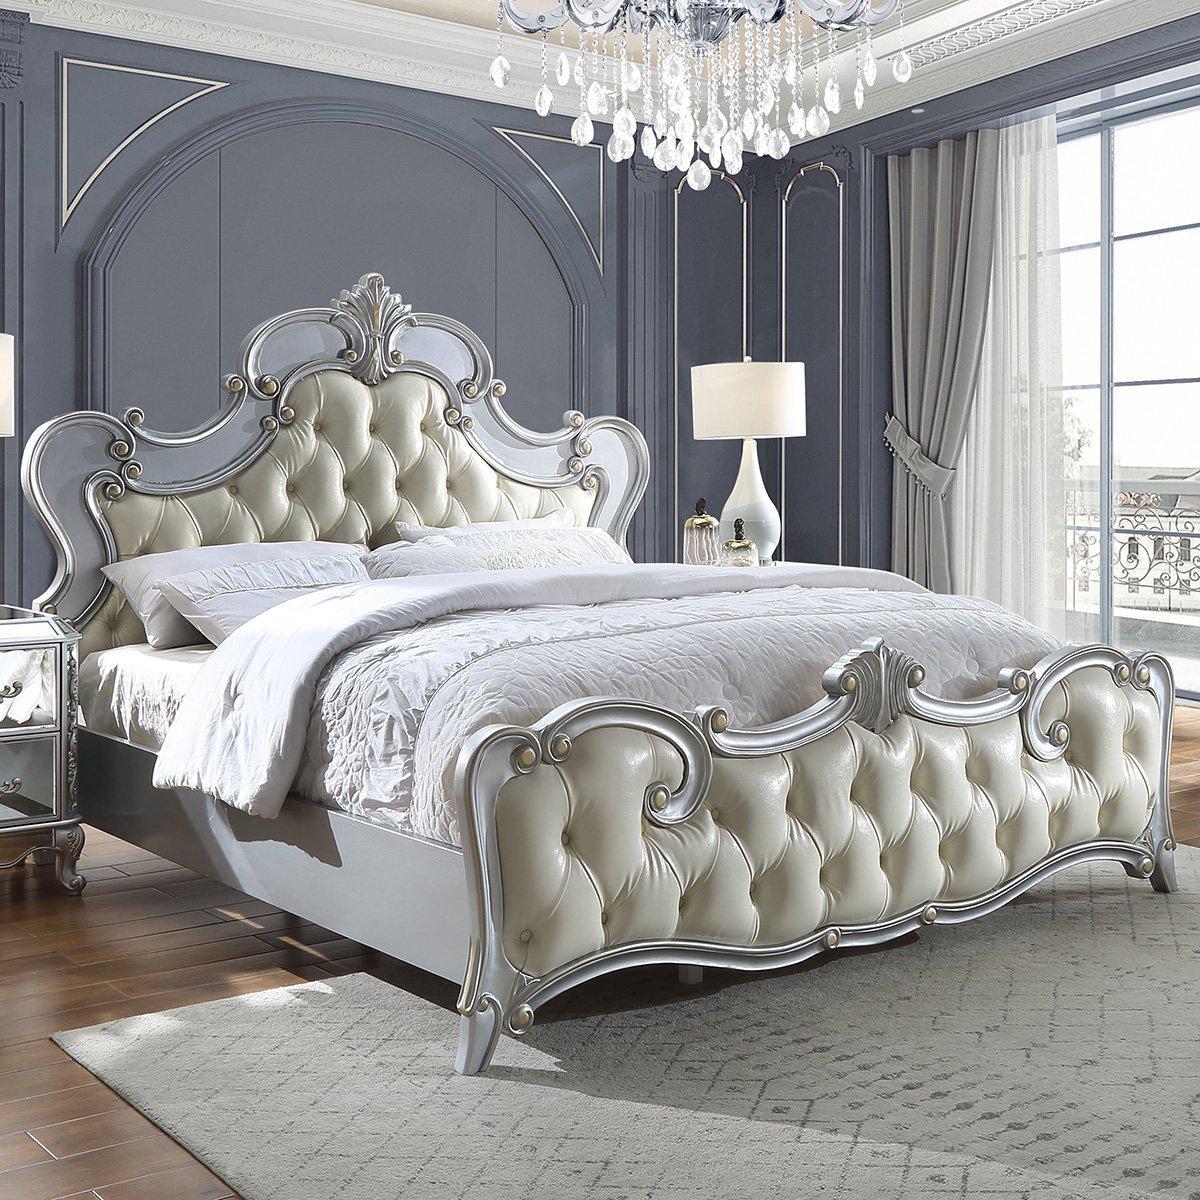 Homey Design Luxury Hd-6036 - Ek 5Pc Bedroom Set-Iron Home Concepts